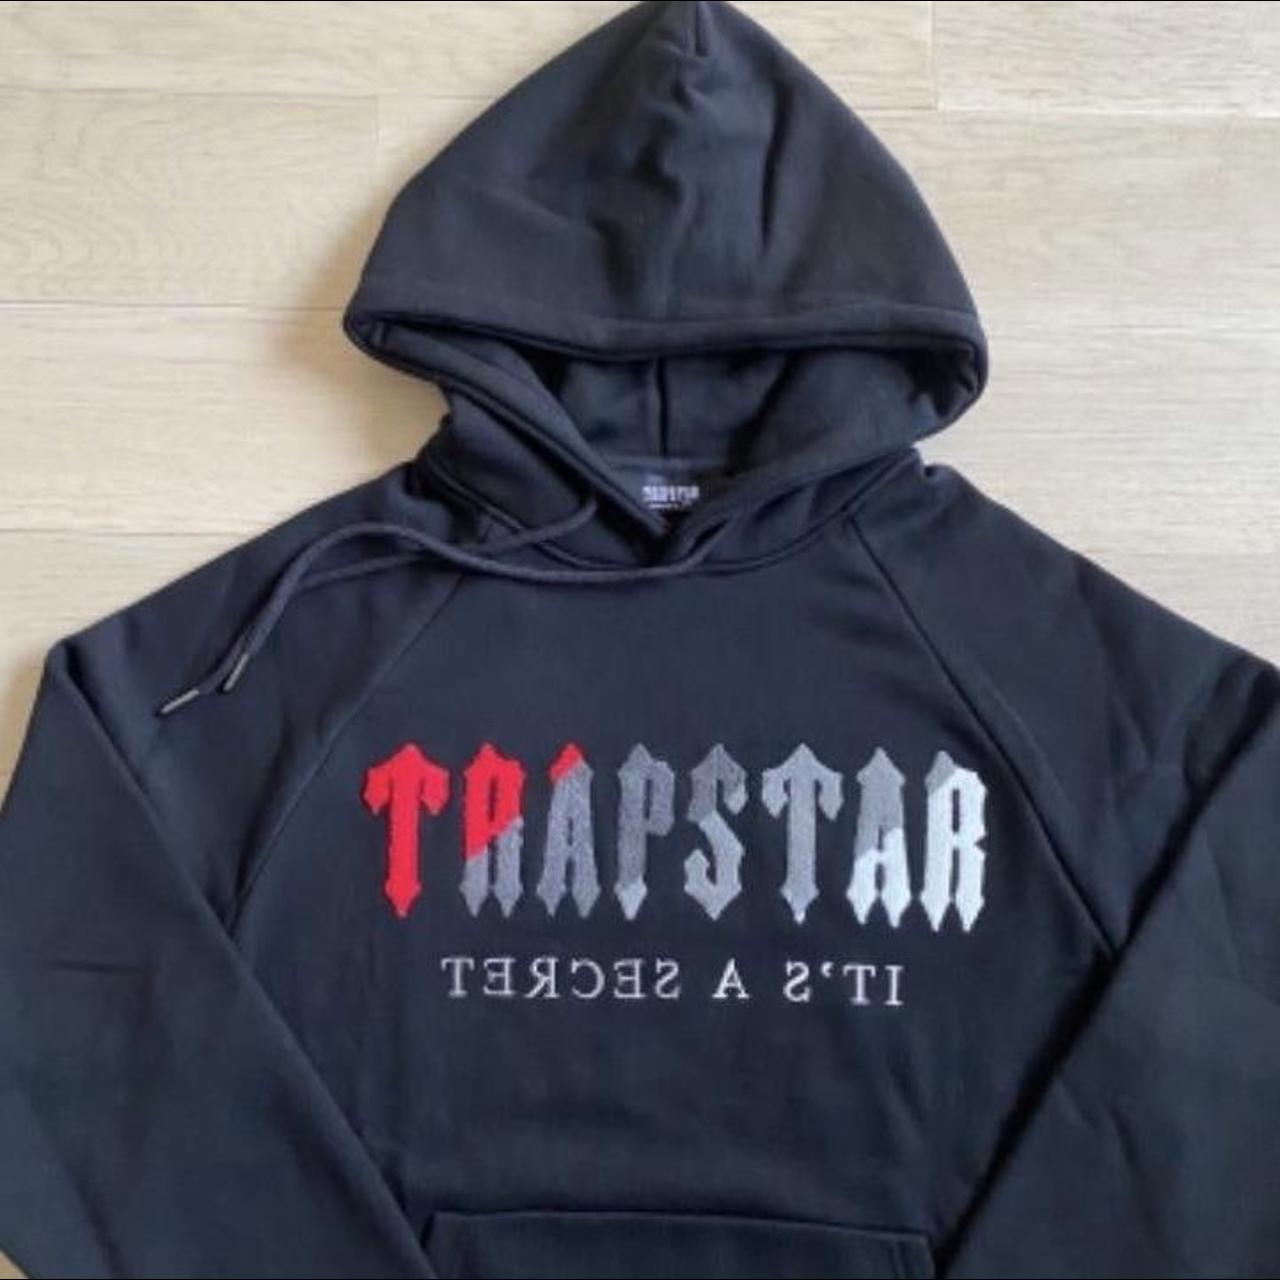 Trapstar tracksuit brand new - Depop